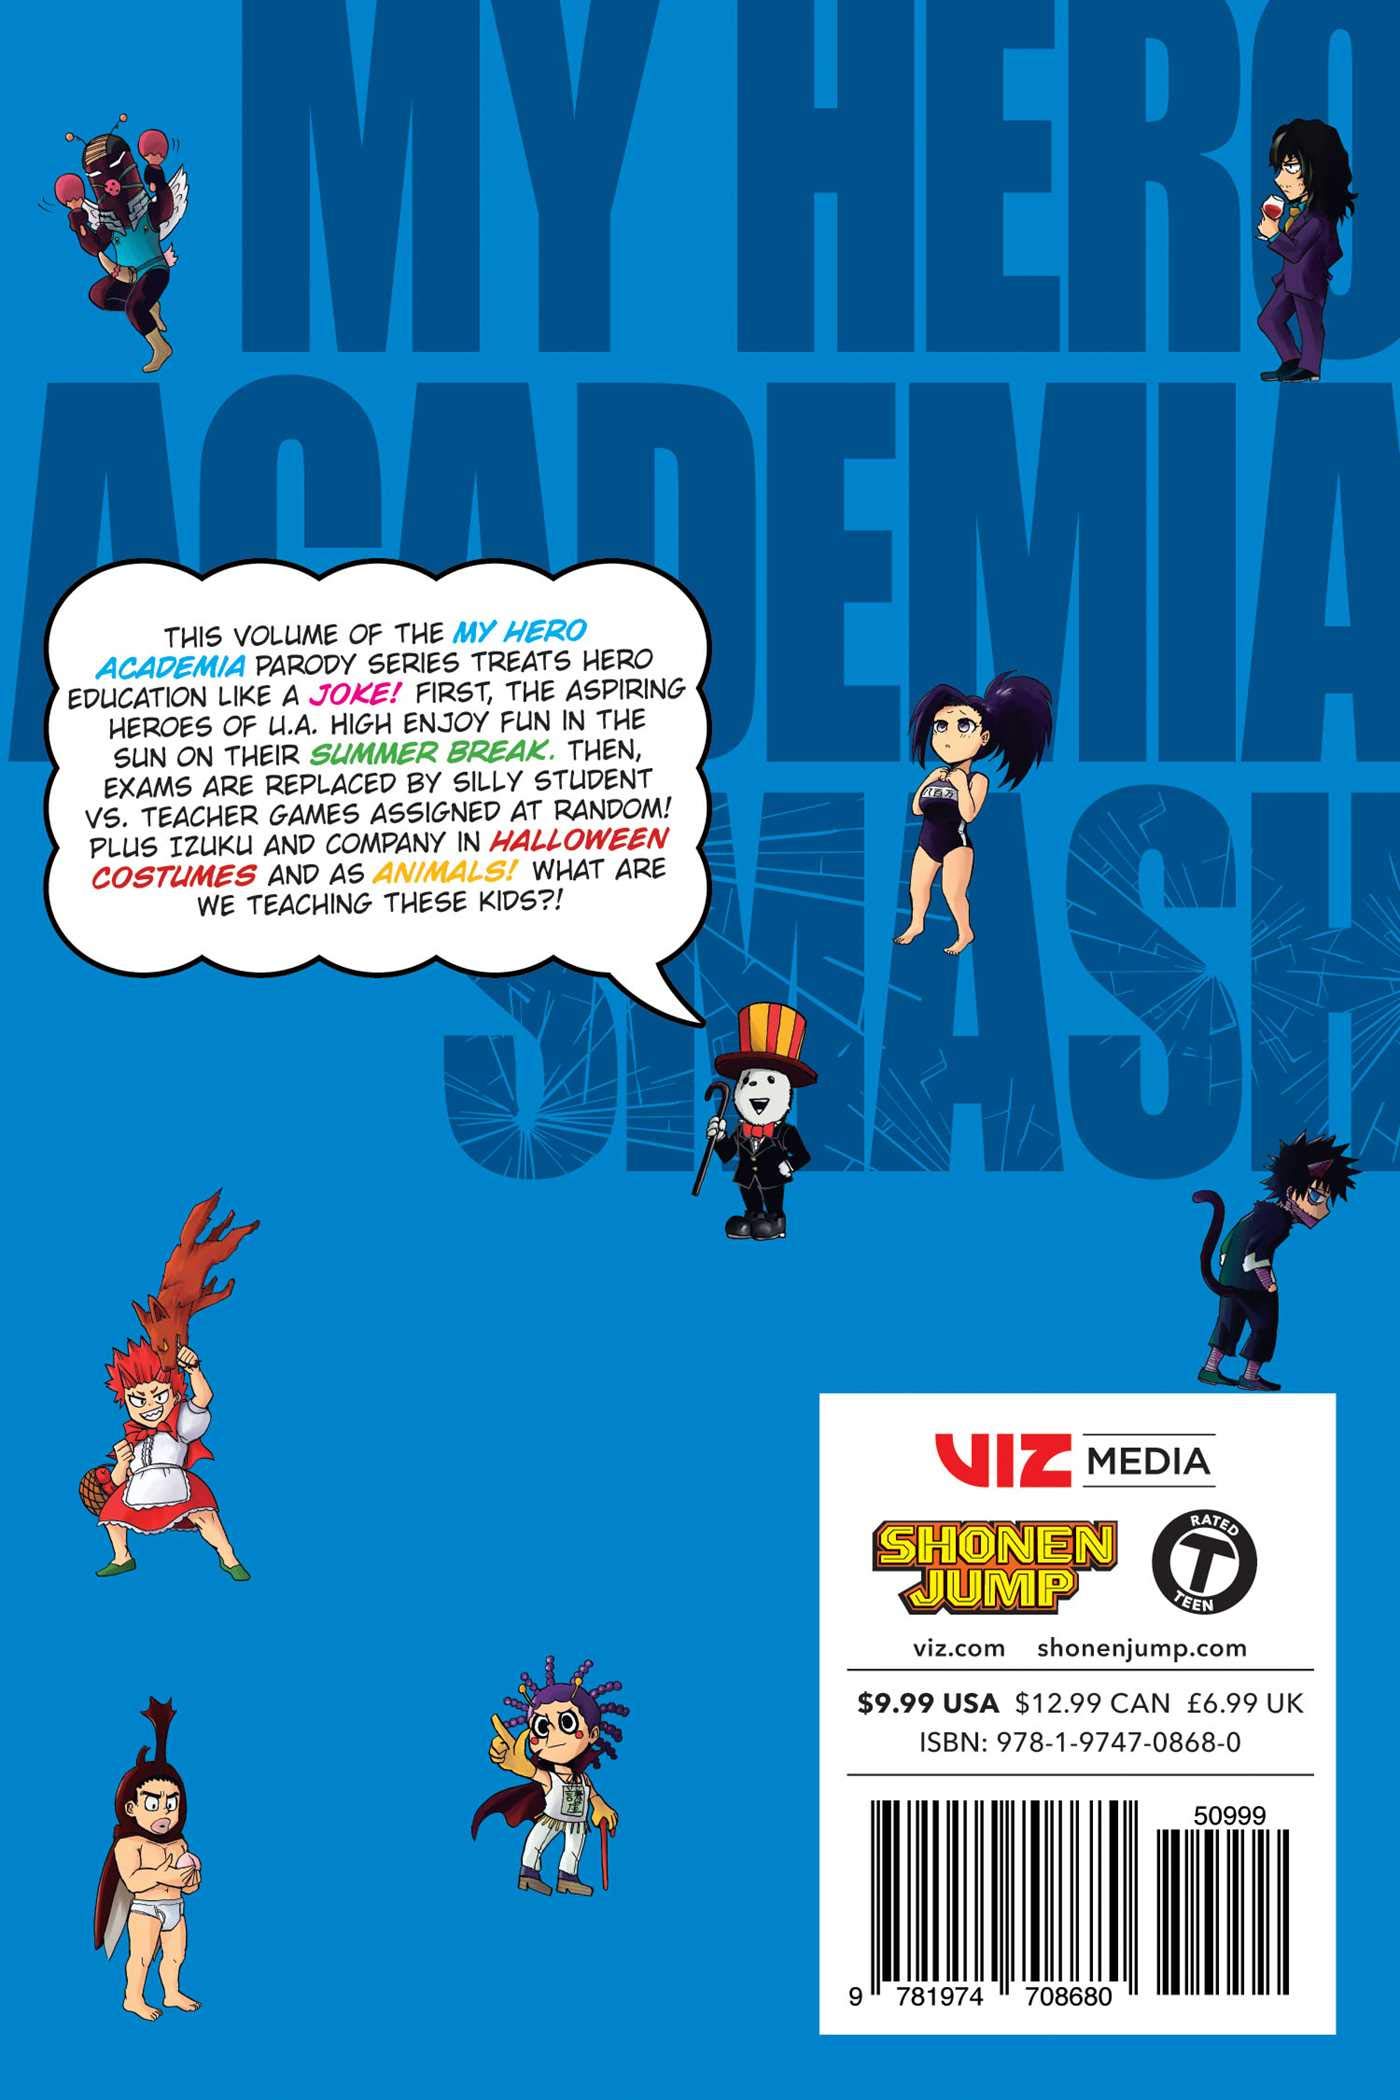 My Hero Academia: Smash!! Volume 3 | Hirofumi Neda, Kohei Horikoshi